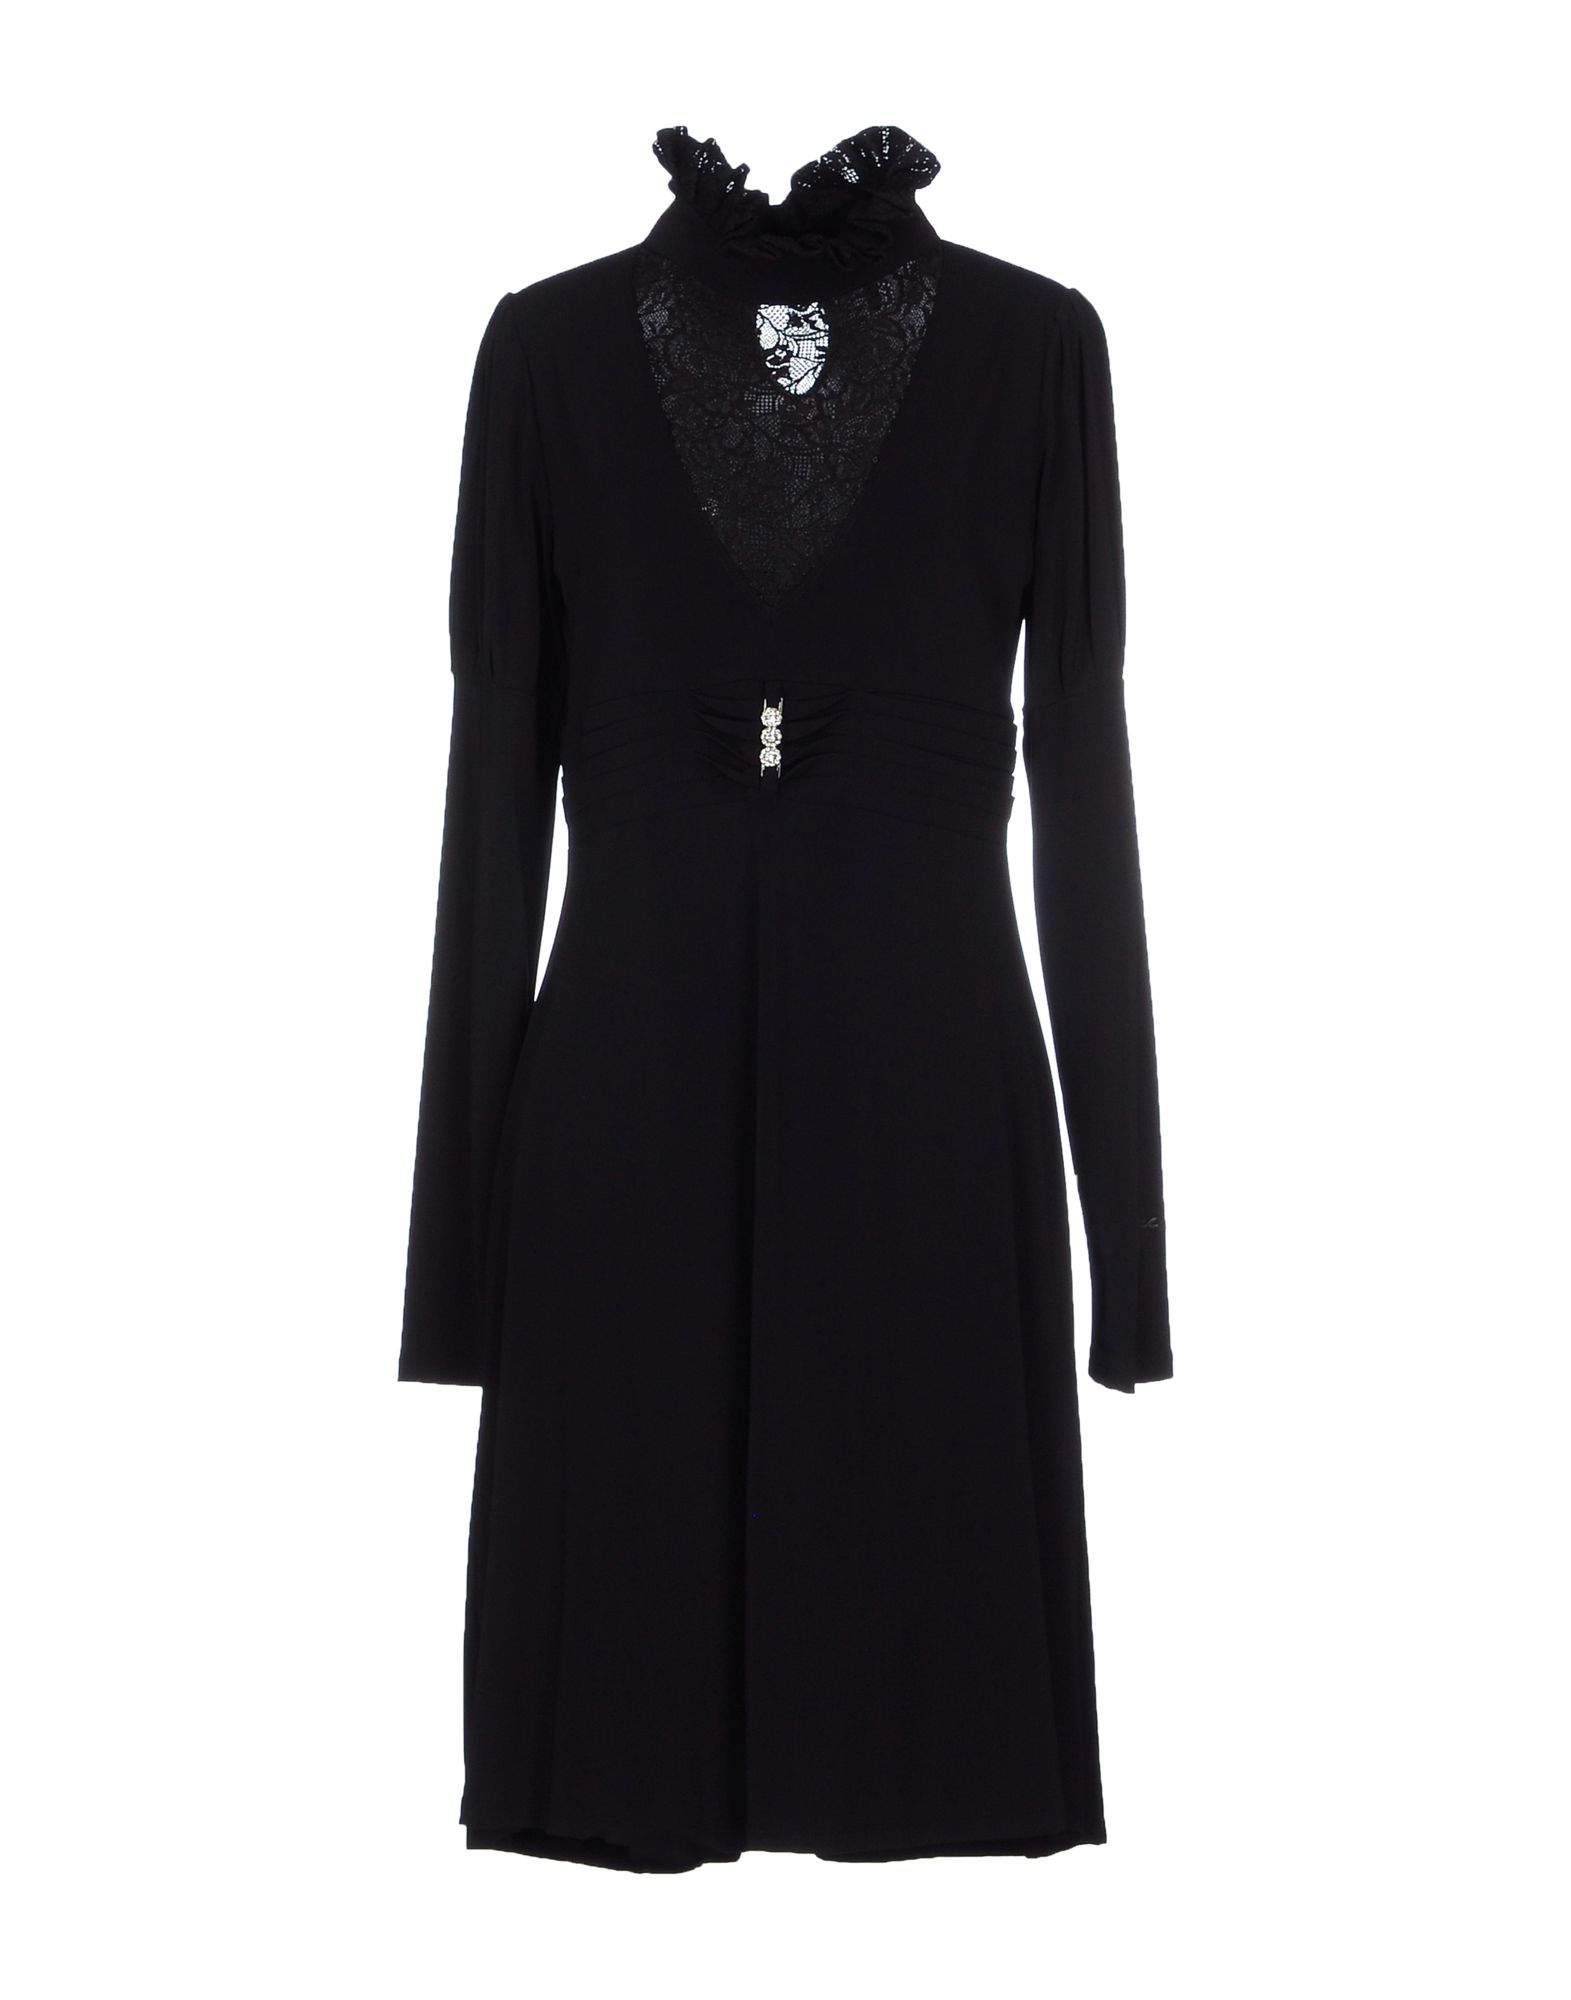 Lyst - Roccobarocco Short Dress in Black